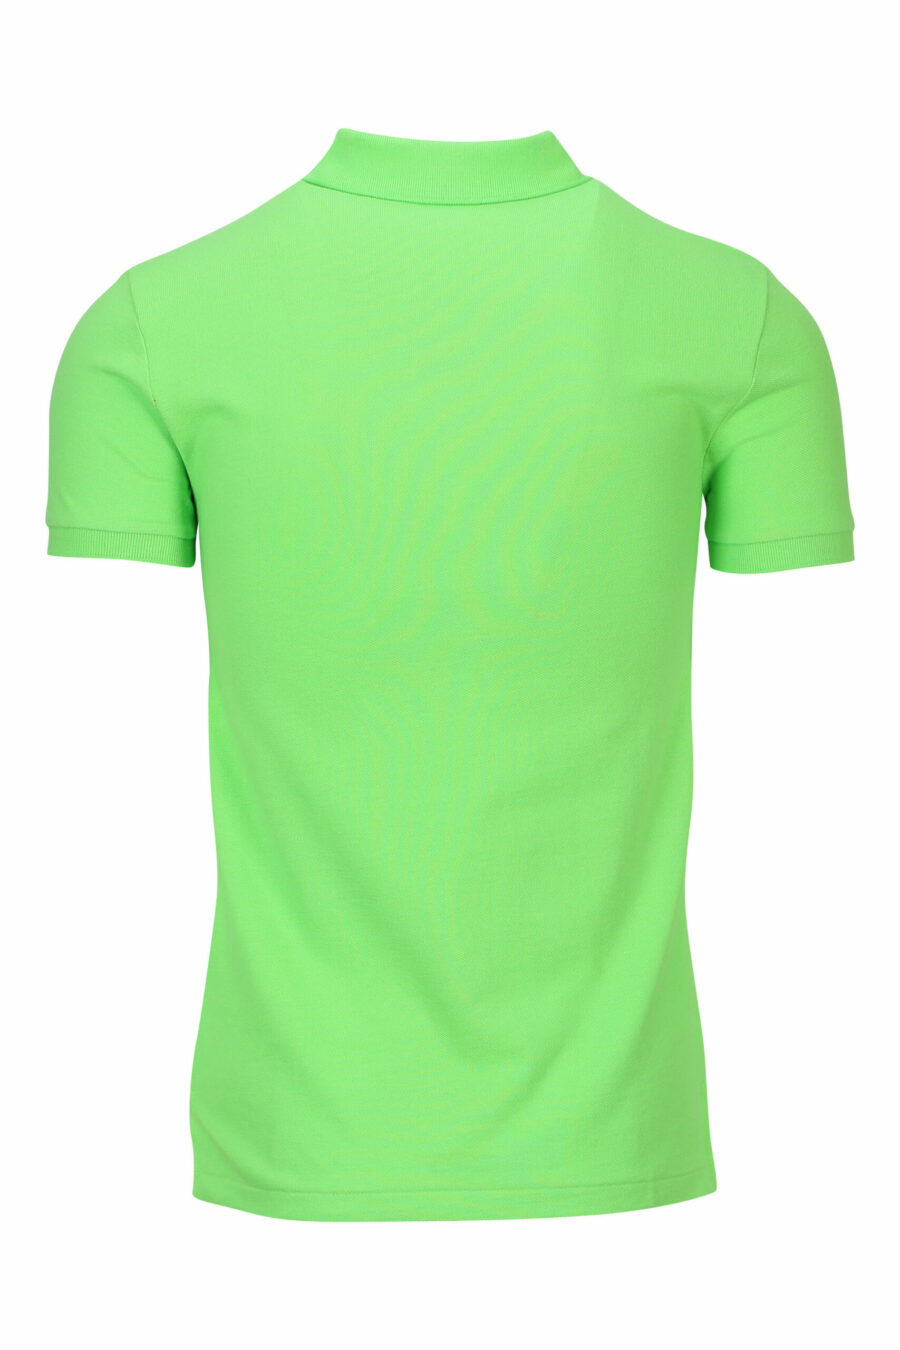 Hellgrünes Poloshirt mit Mini-Logo "Polo" - 3616411864338 1 skaliert